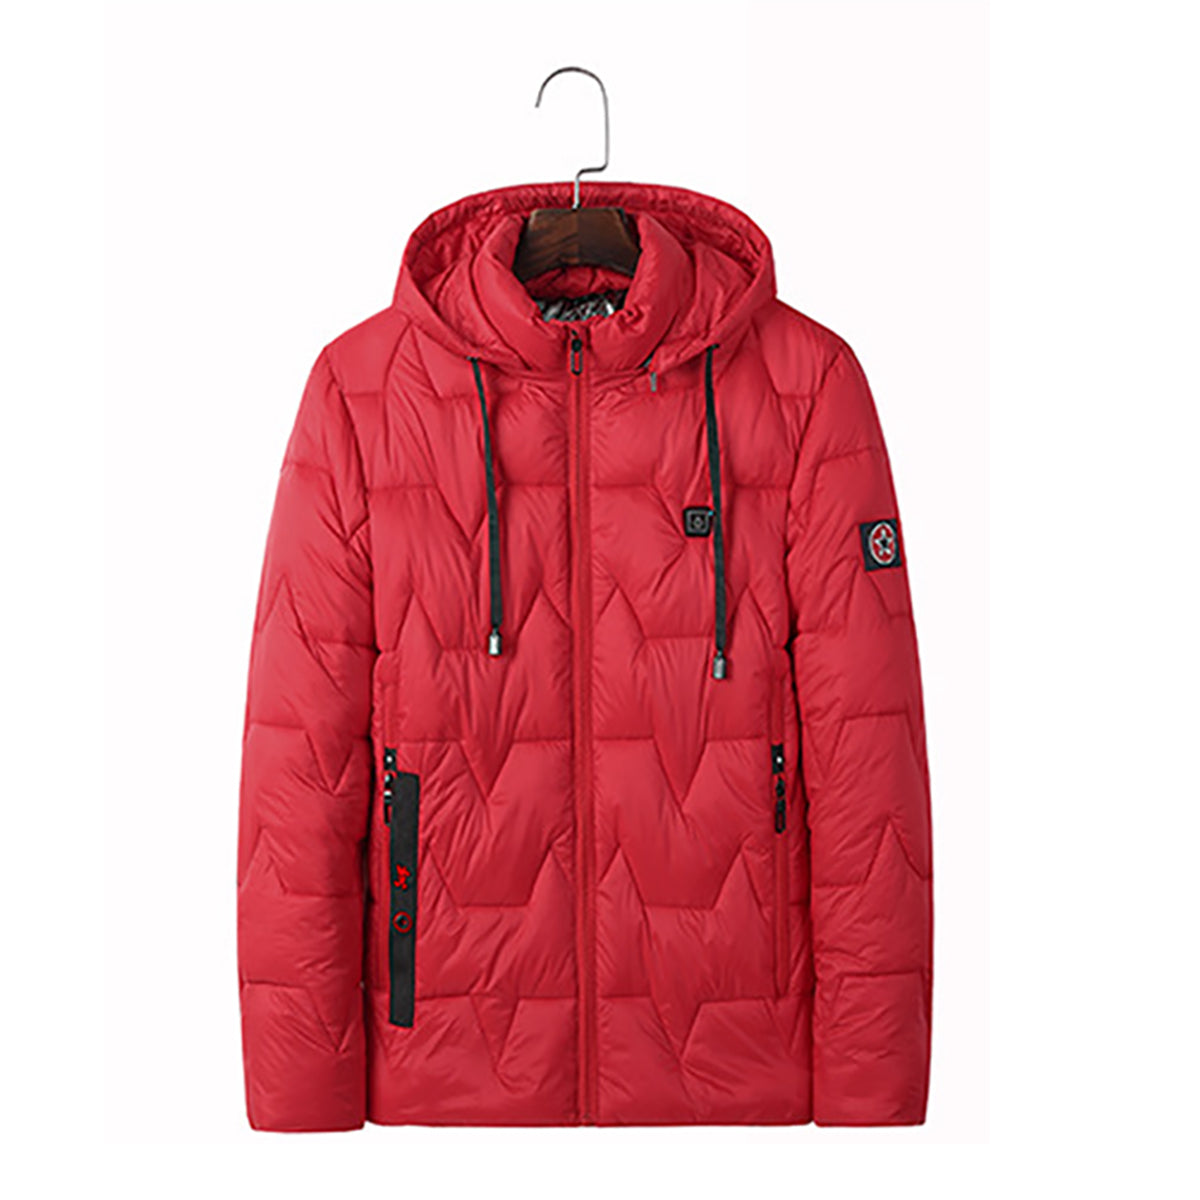 Firebrick USB Electric Heated Coats Heating Hooded Jacket Long Sleeves Winter Warm Clothing